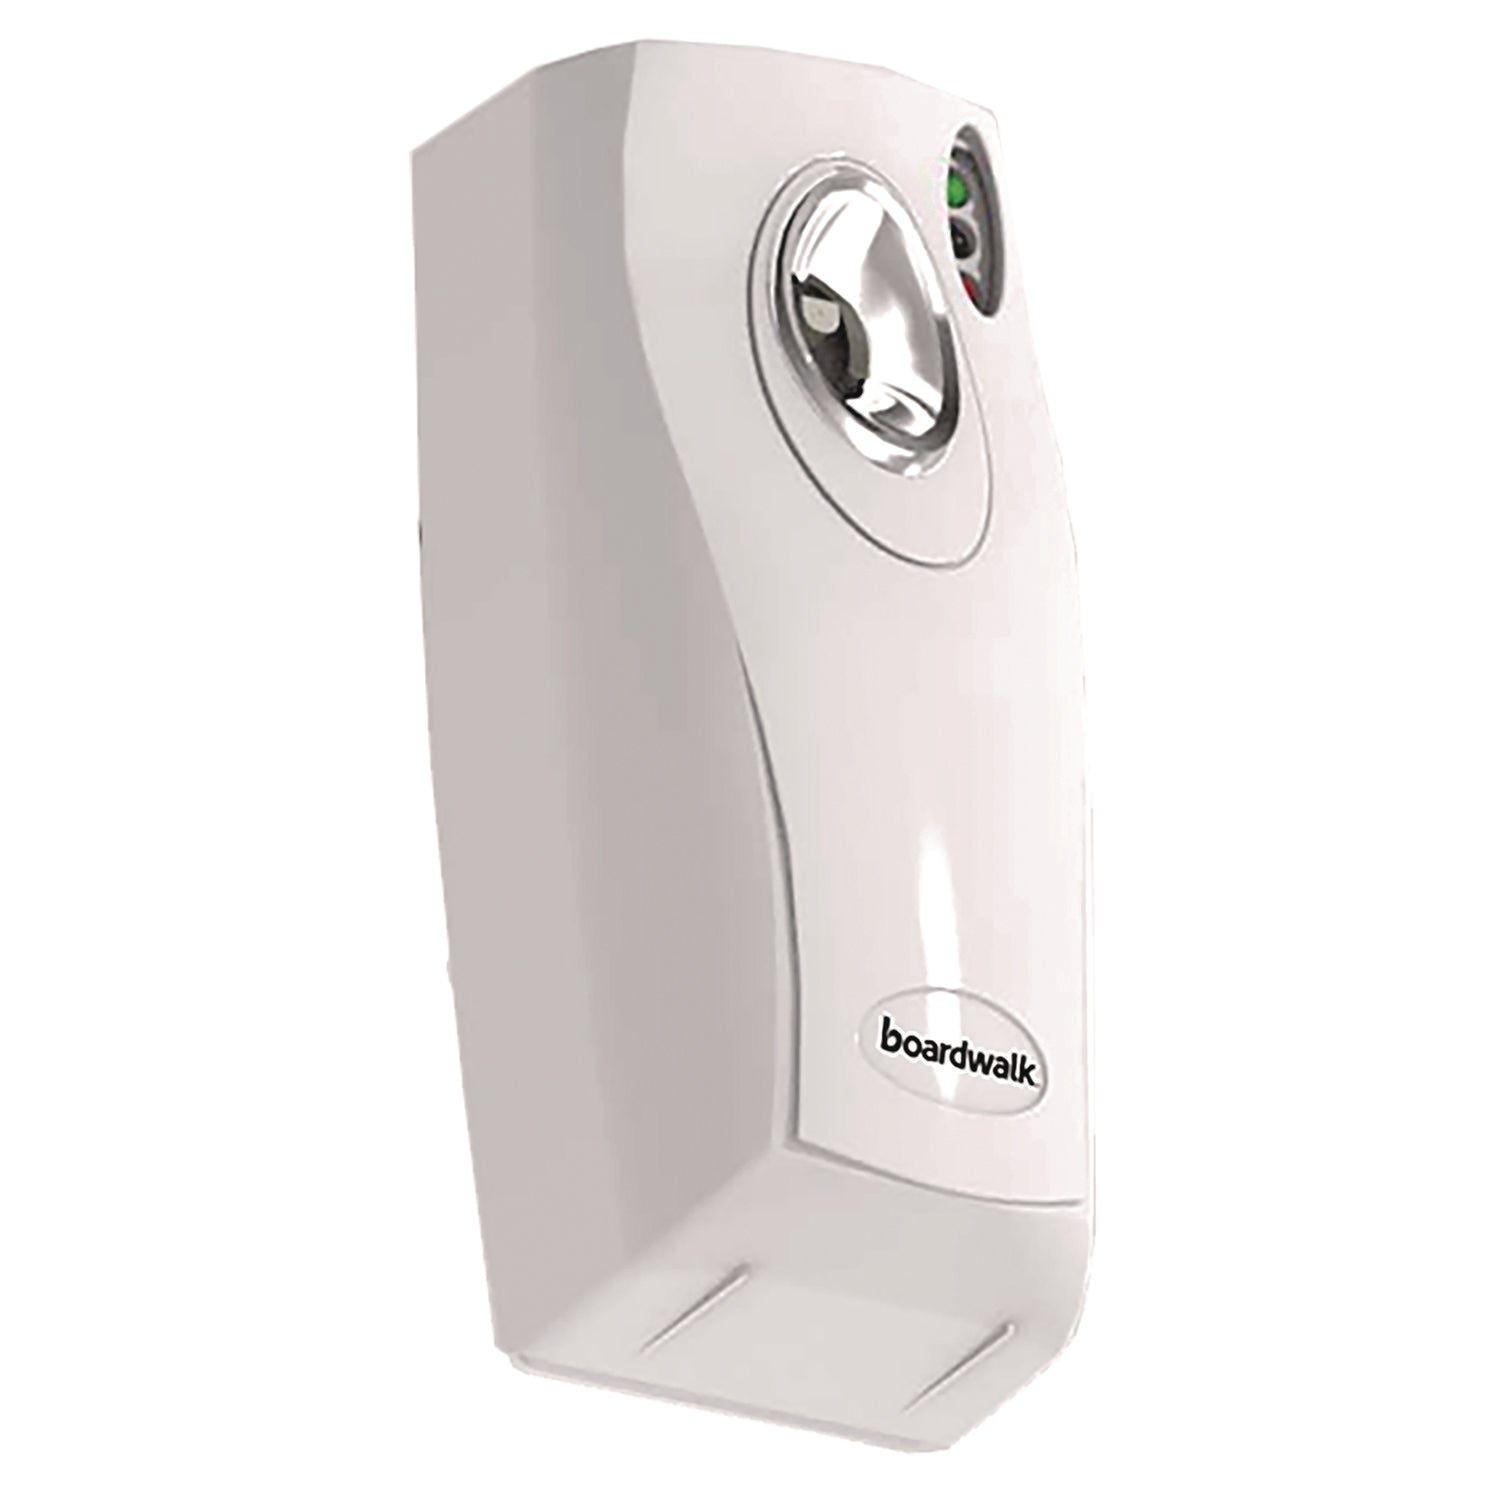 classic-metered-air-freshener-dispenser-4-x-3-x-95-white_bwk908 - 4